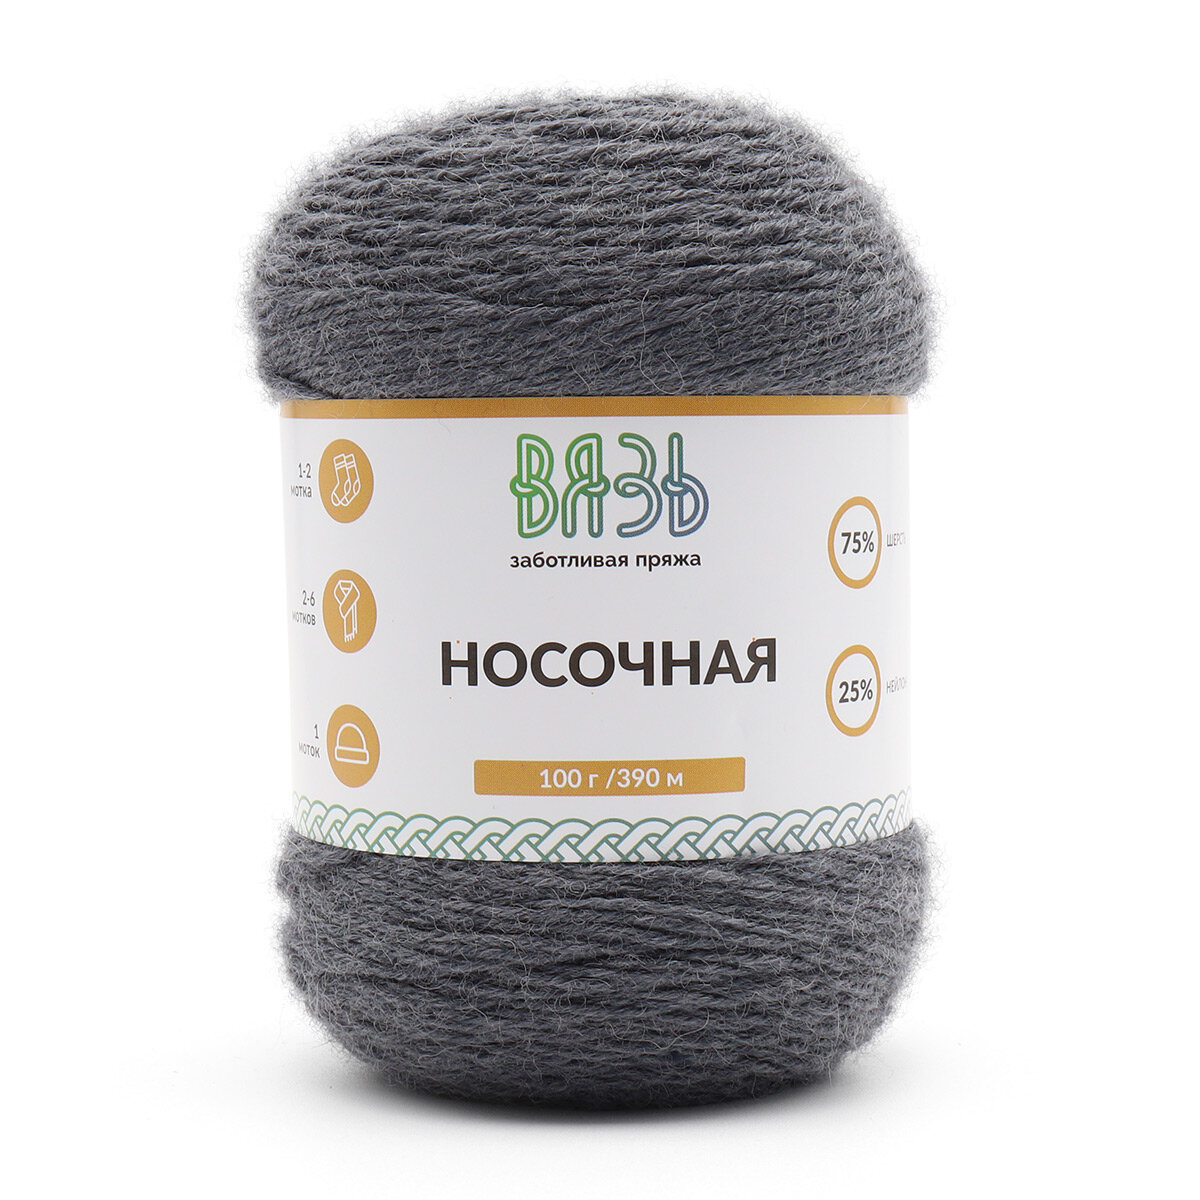 Пряжа для вязания Вязь 'Носочная' 100г, 390м (75% шерсть, 25% нейлон) (06 серый), 3 мотка